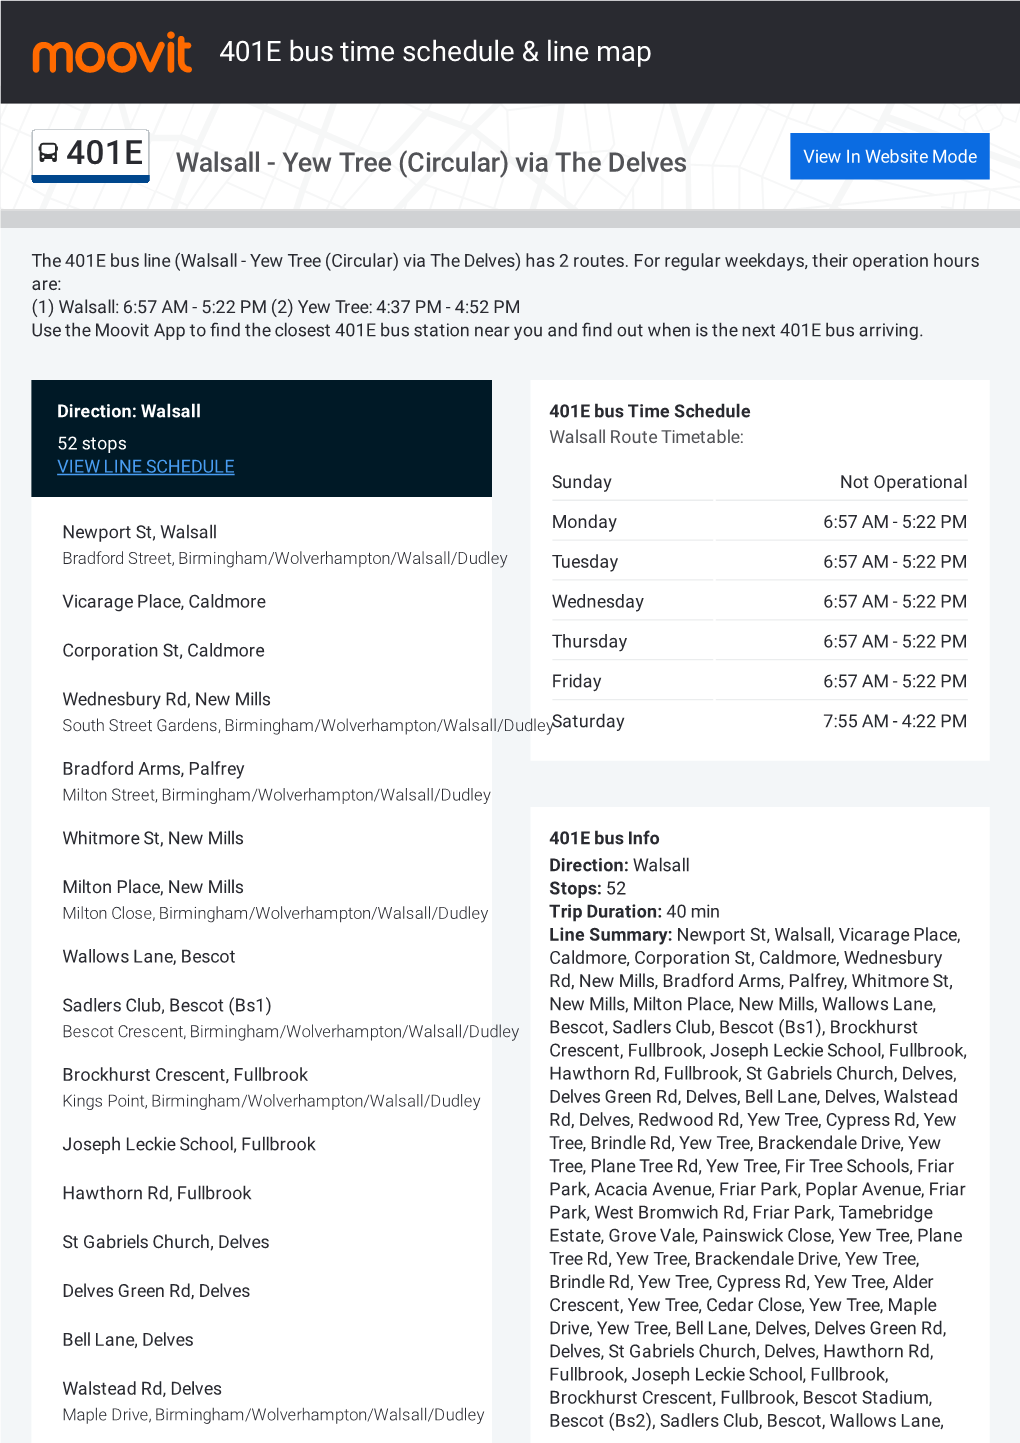 401E Bus Time Schedule & Line Route